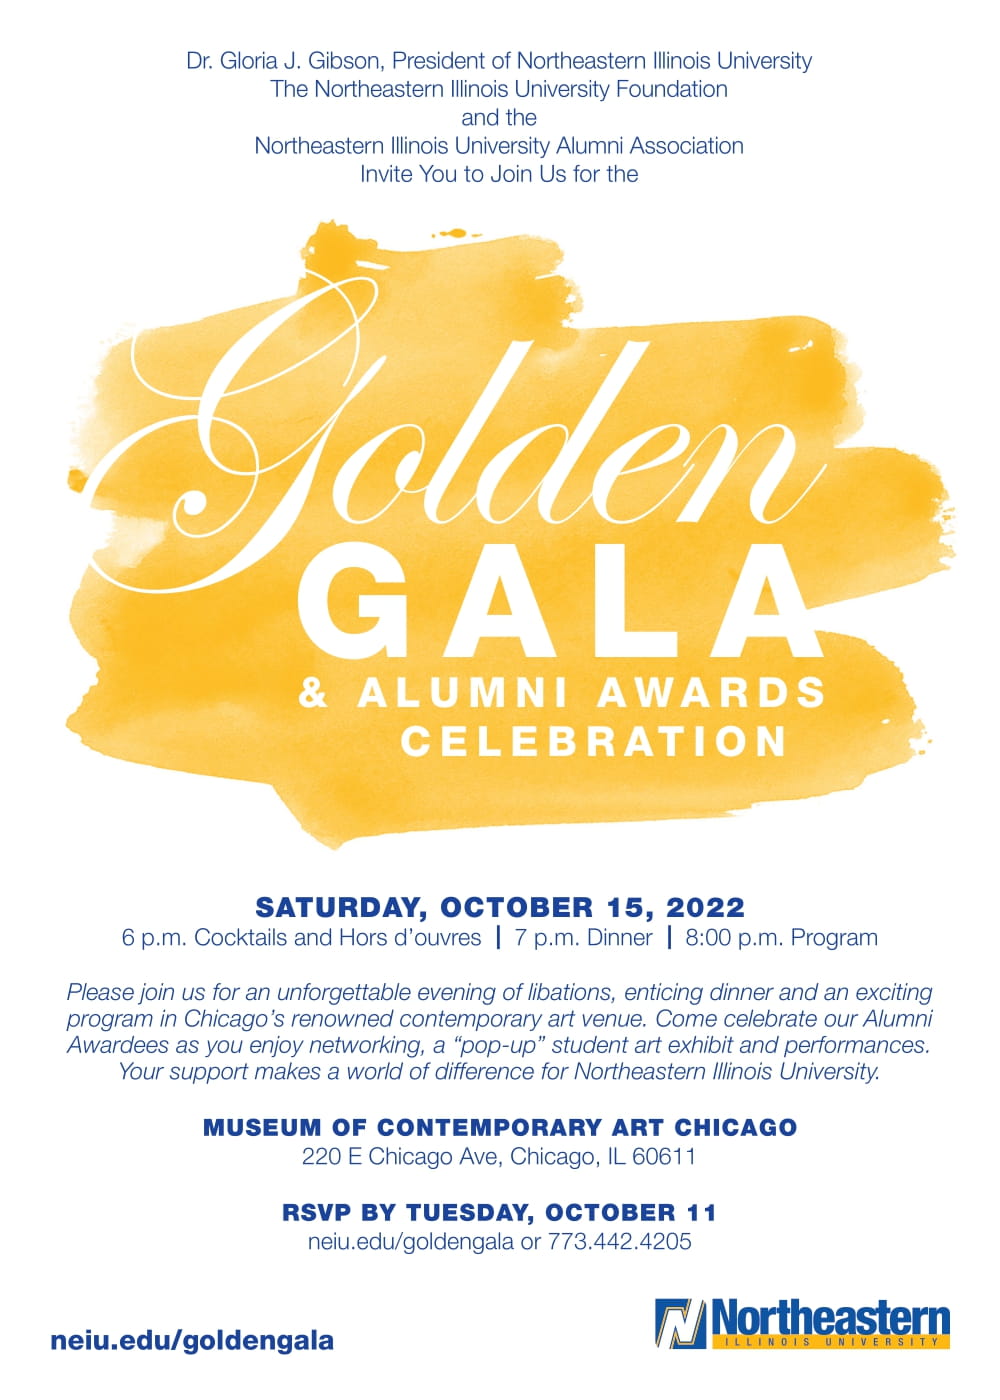 Golden Gala and Alumni Awards Celebration flyer